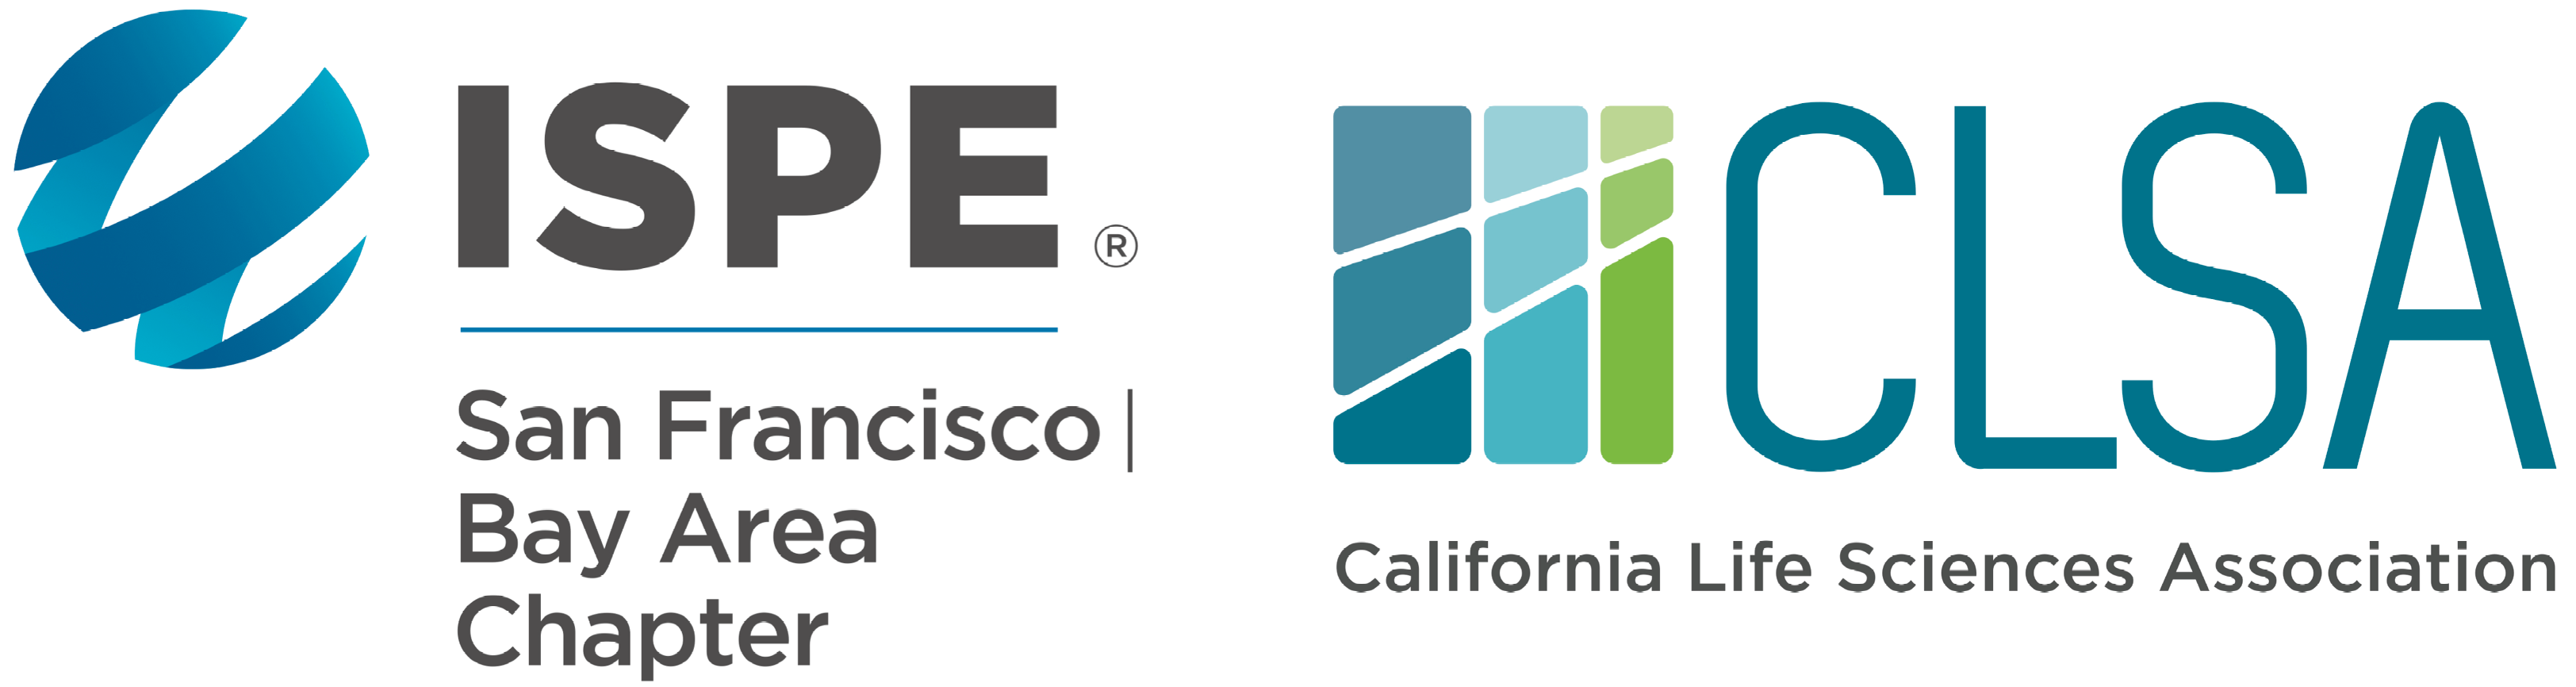 ISPE SF and CLSA Logos